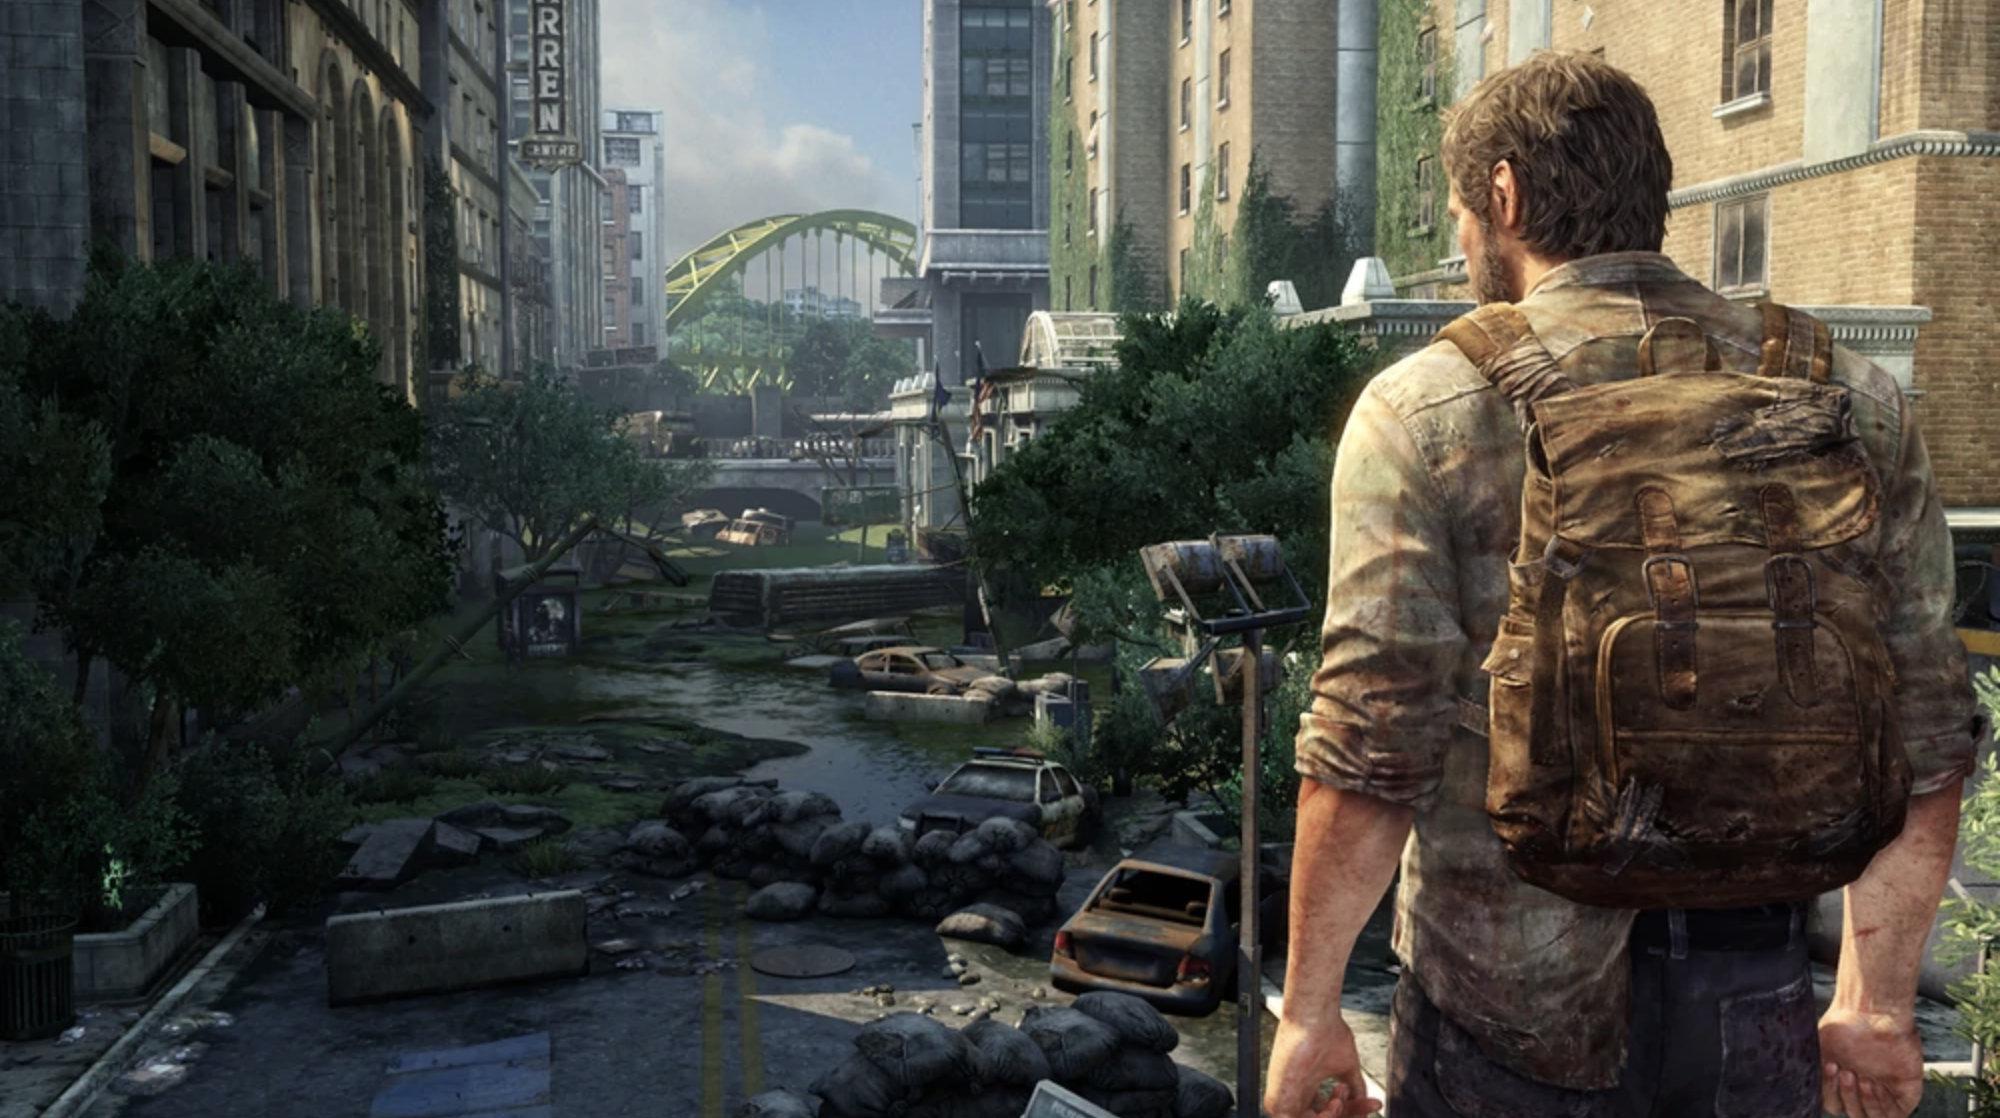 Meet Neil Druckmann, the Creative Genius Behind “The Last of Us”